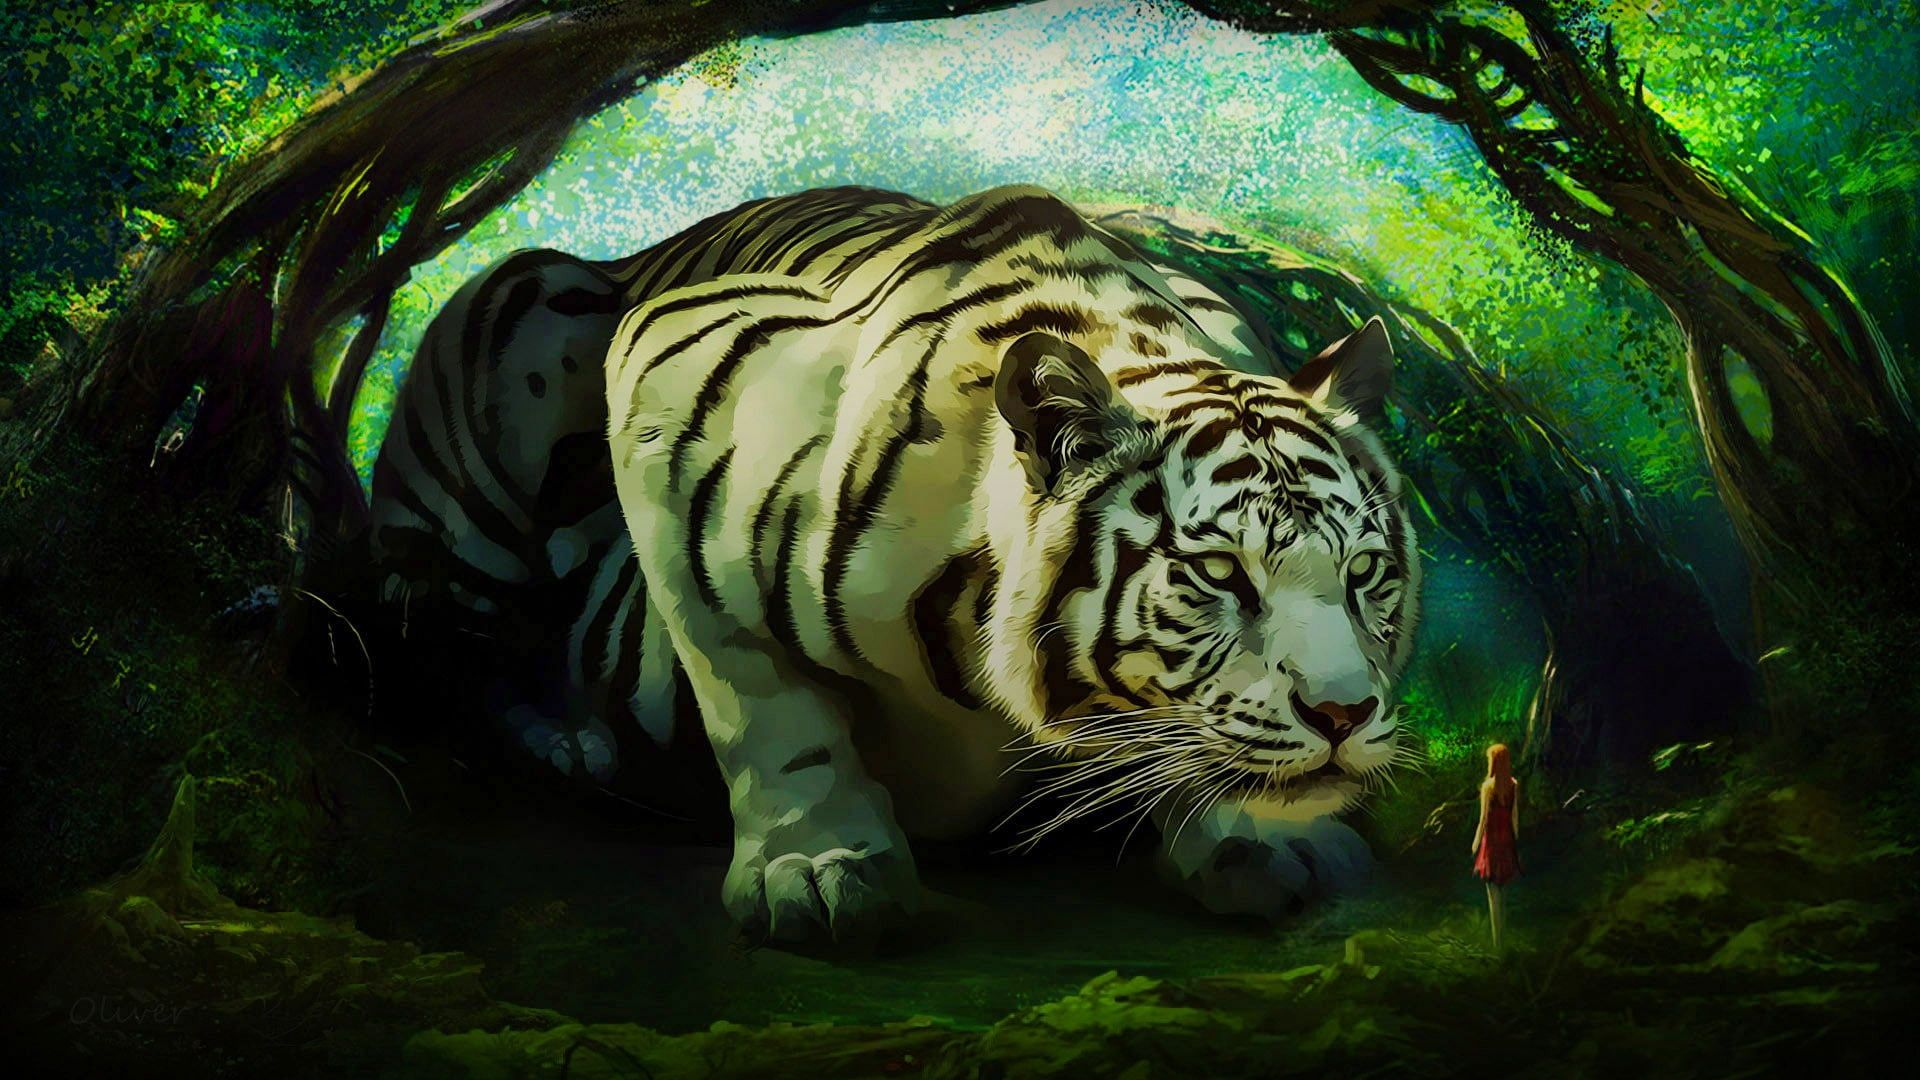 Fantasy Tiger Wallpapers